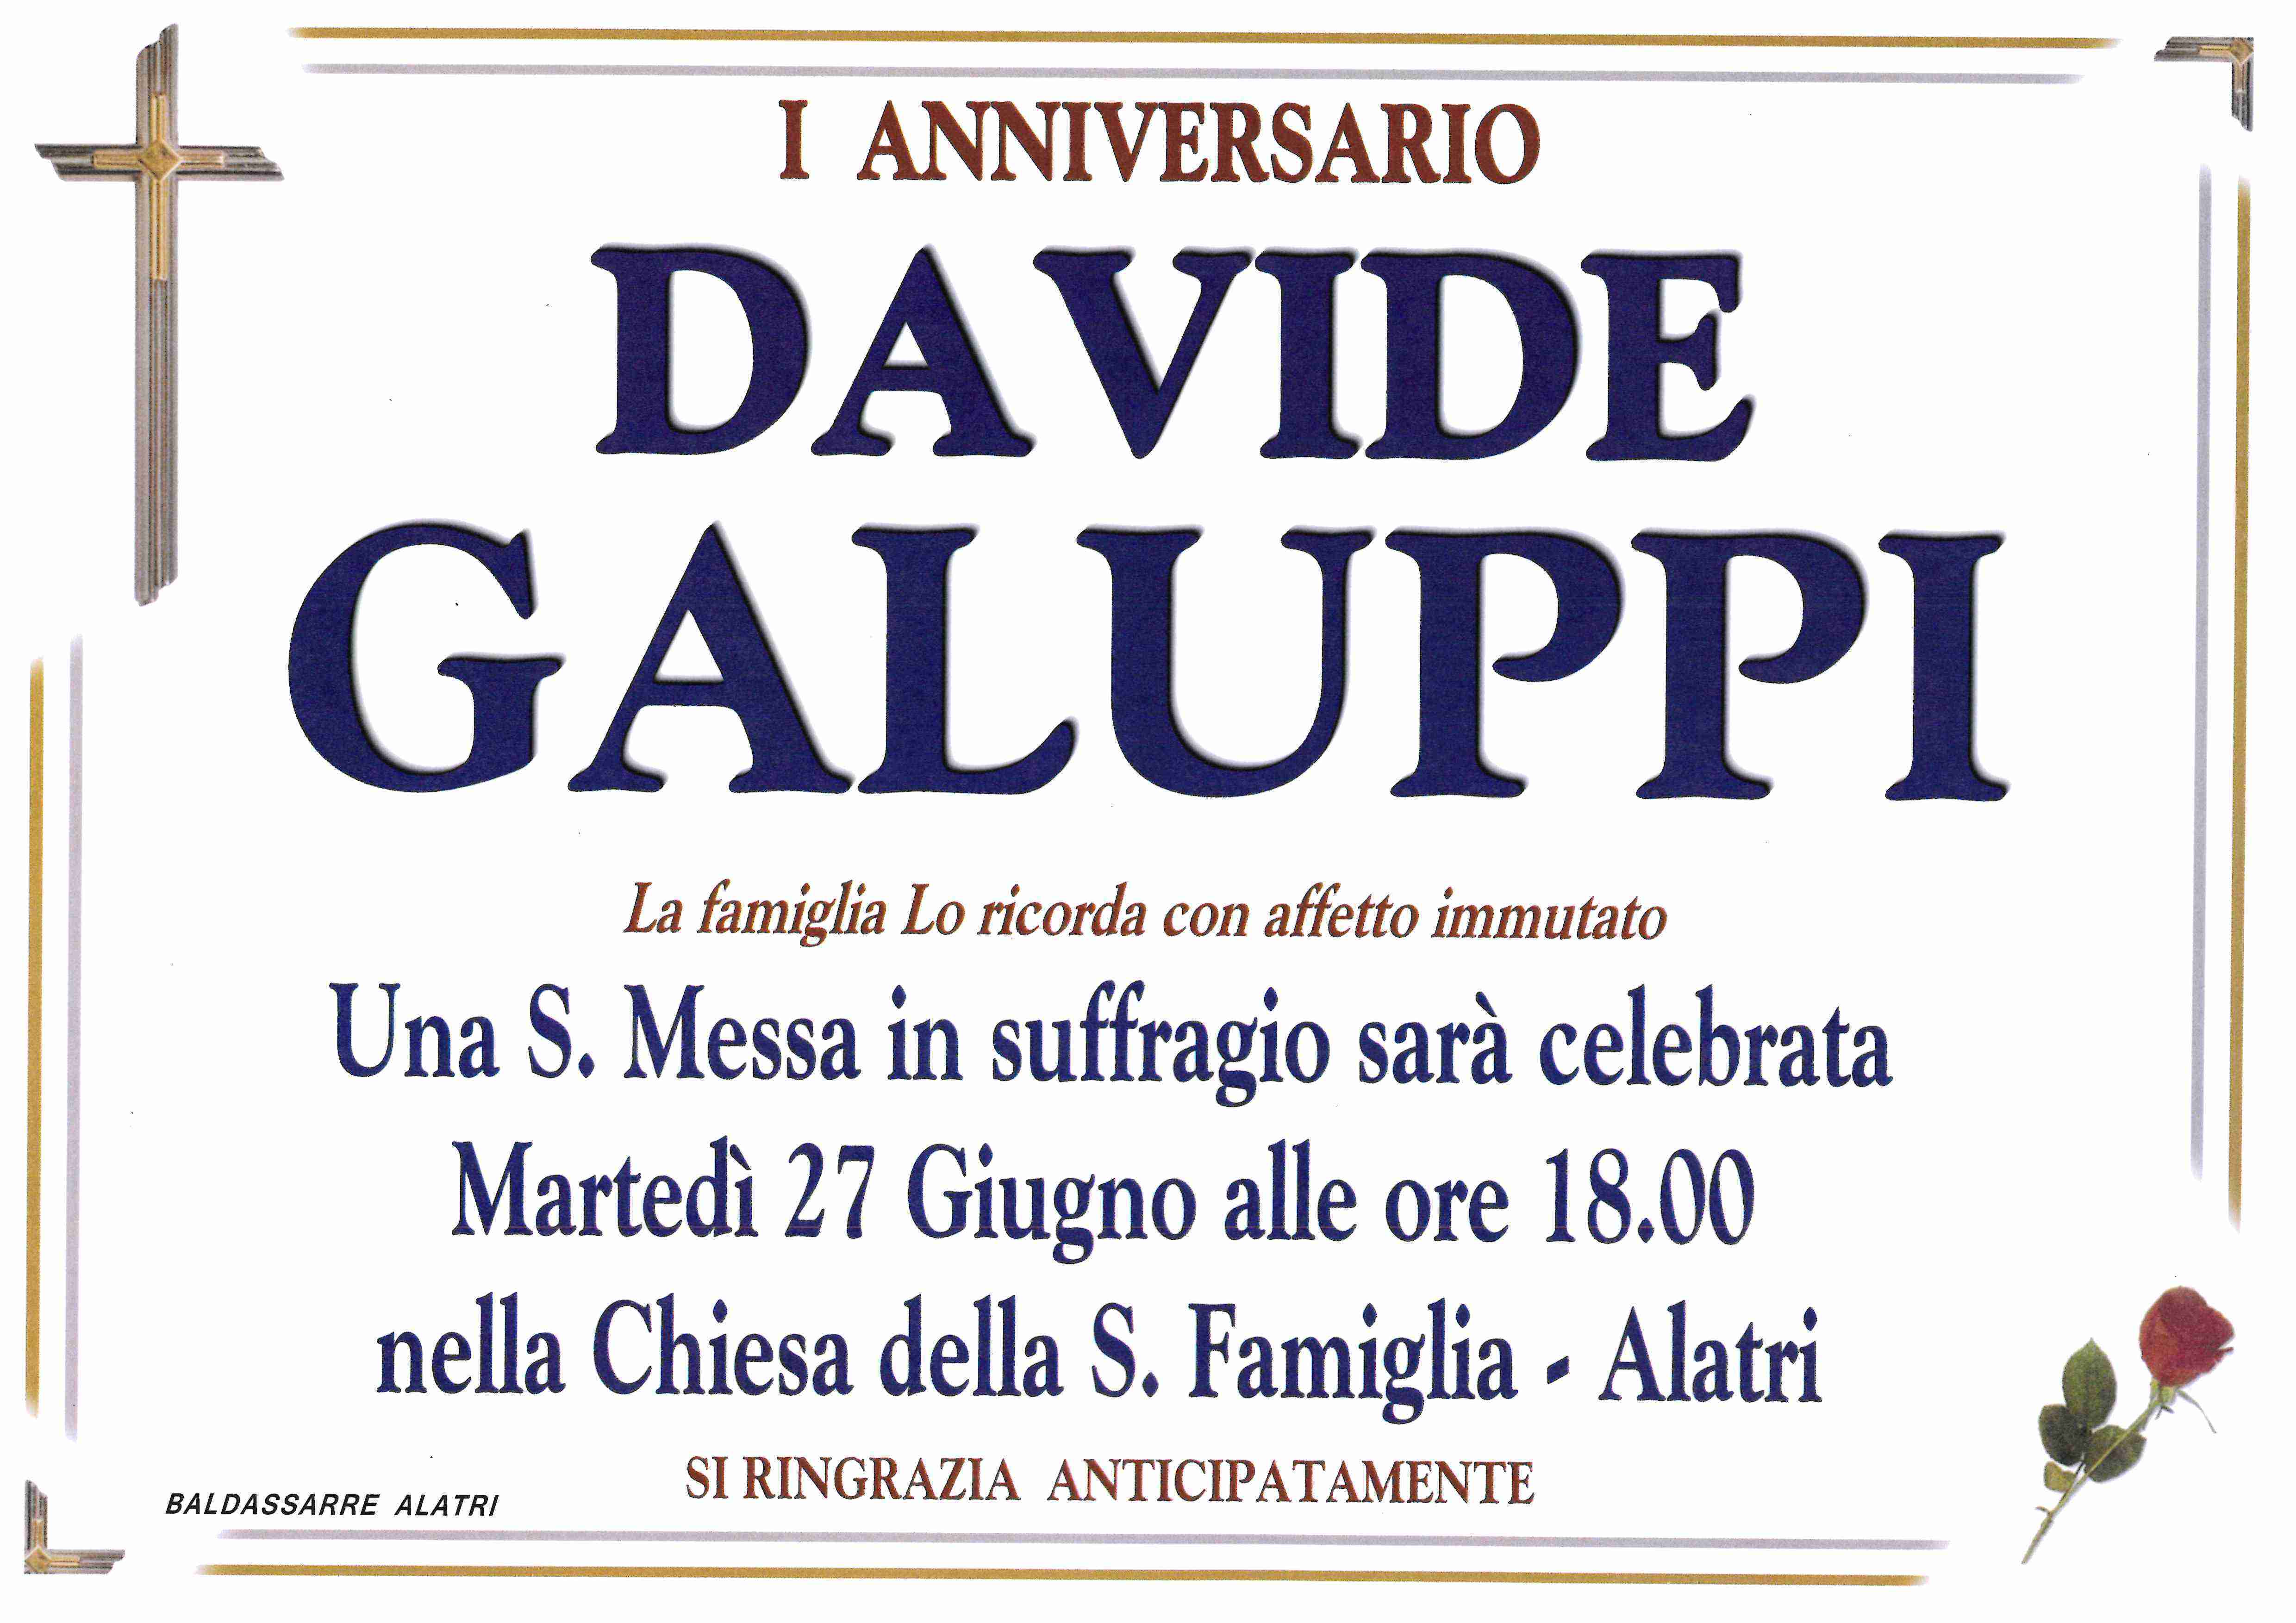 Davide Galuppi